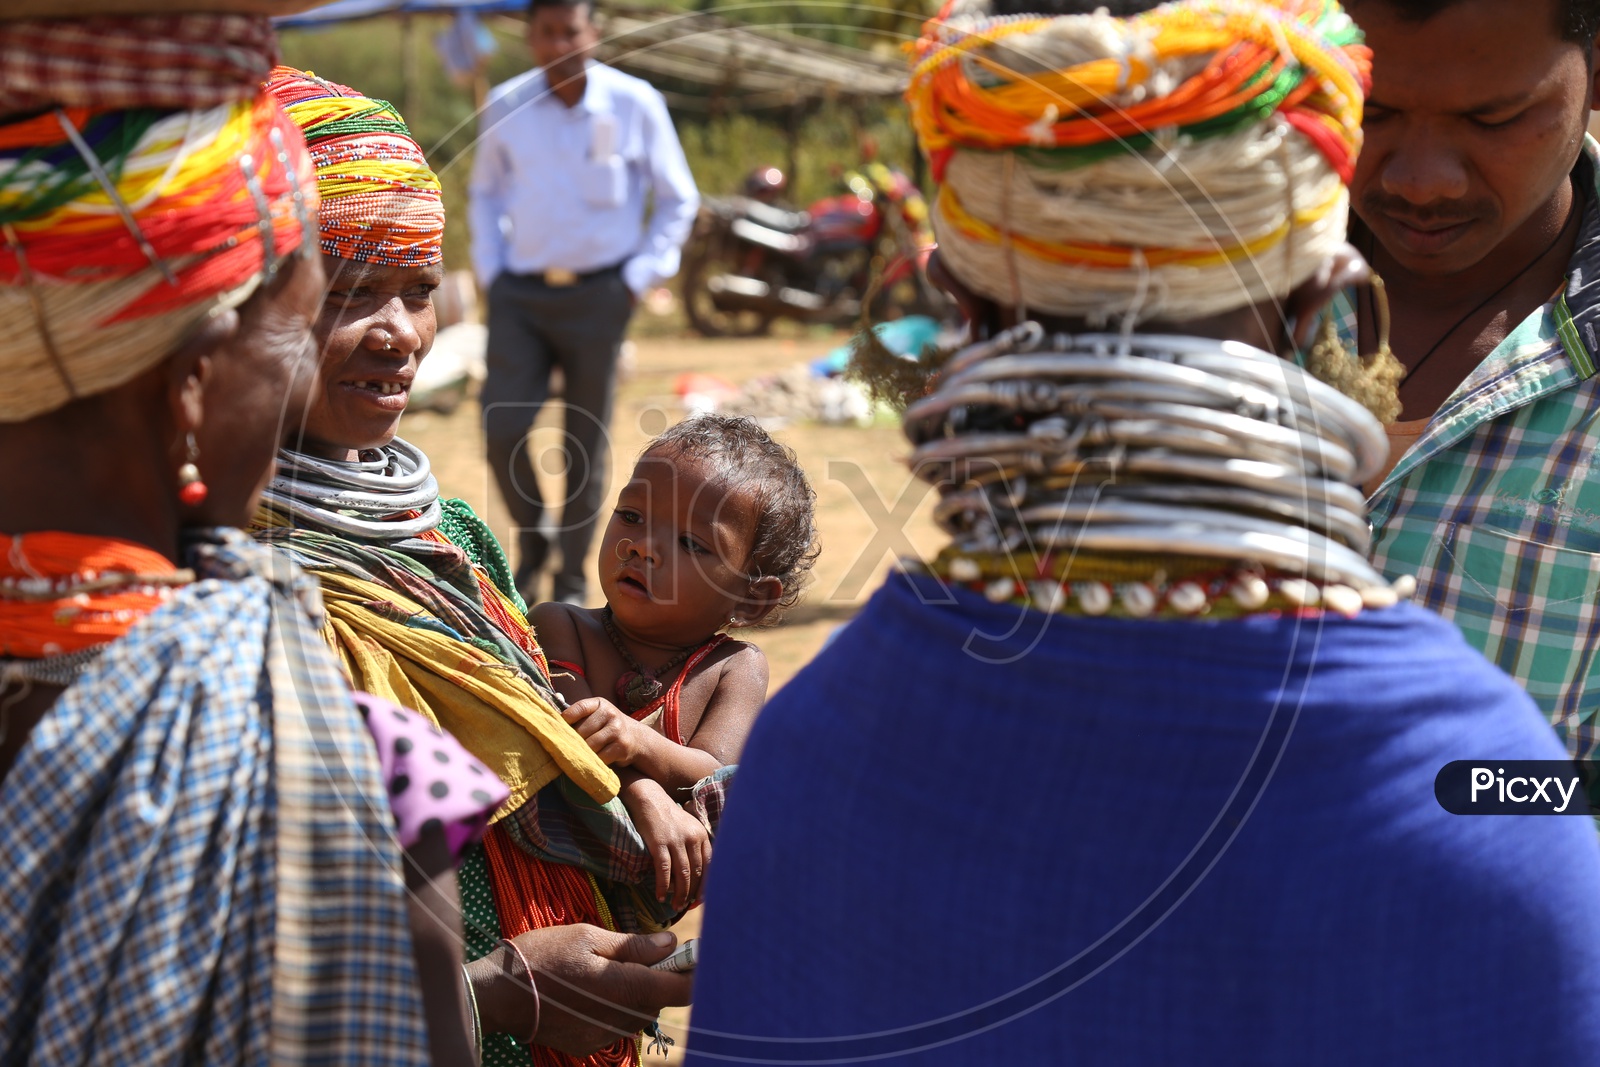 Bonda Tribal Woman At Local Markets  In Rural Tribal Villages of Odisha Andhra Border